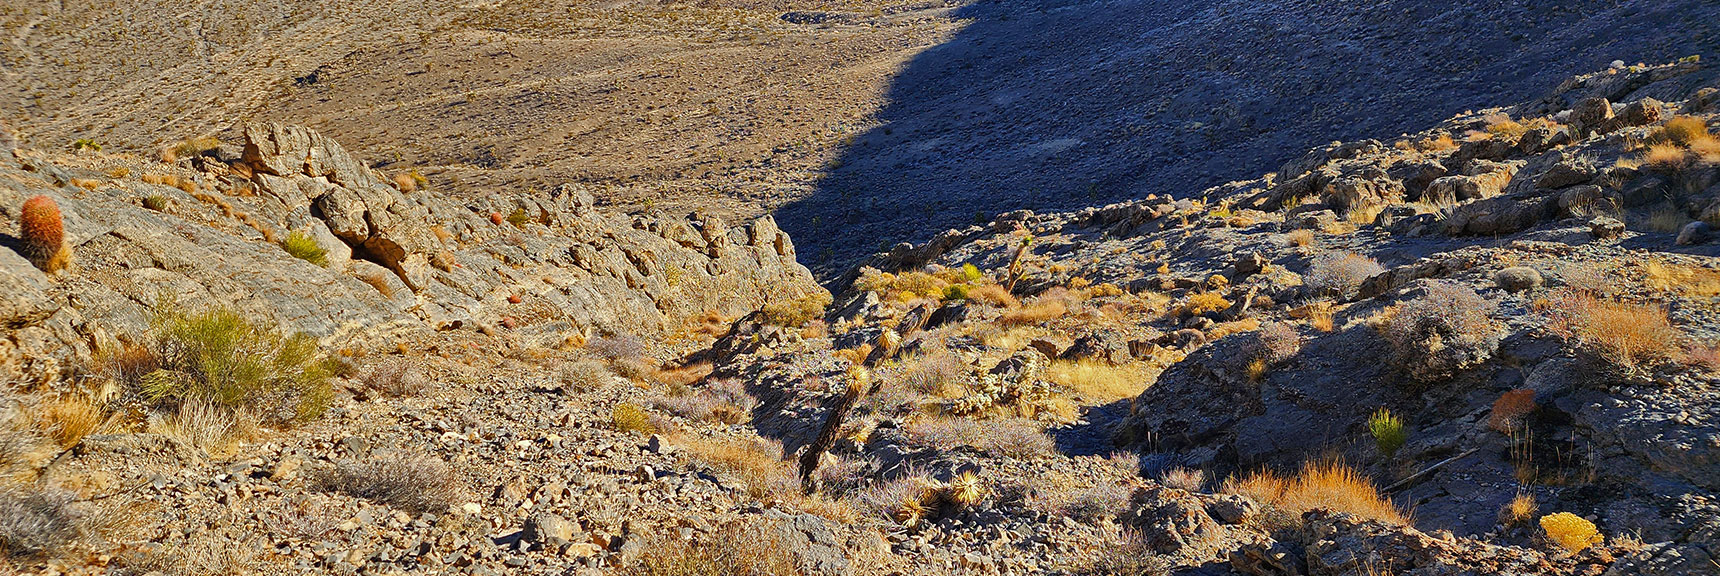 View Back Down the Gully Just Ascended | Fossil Ridge Far East | Desert National Wildlife Refuge, Nevada